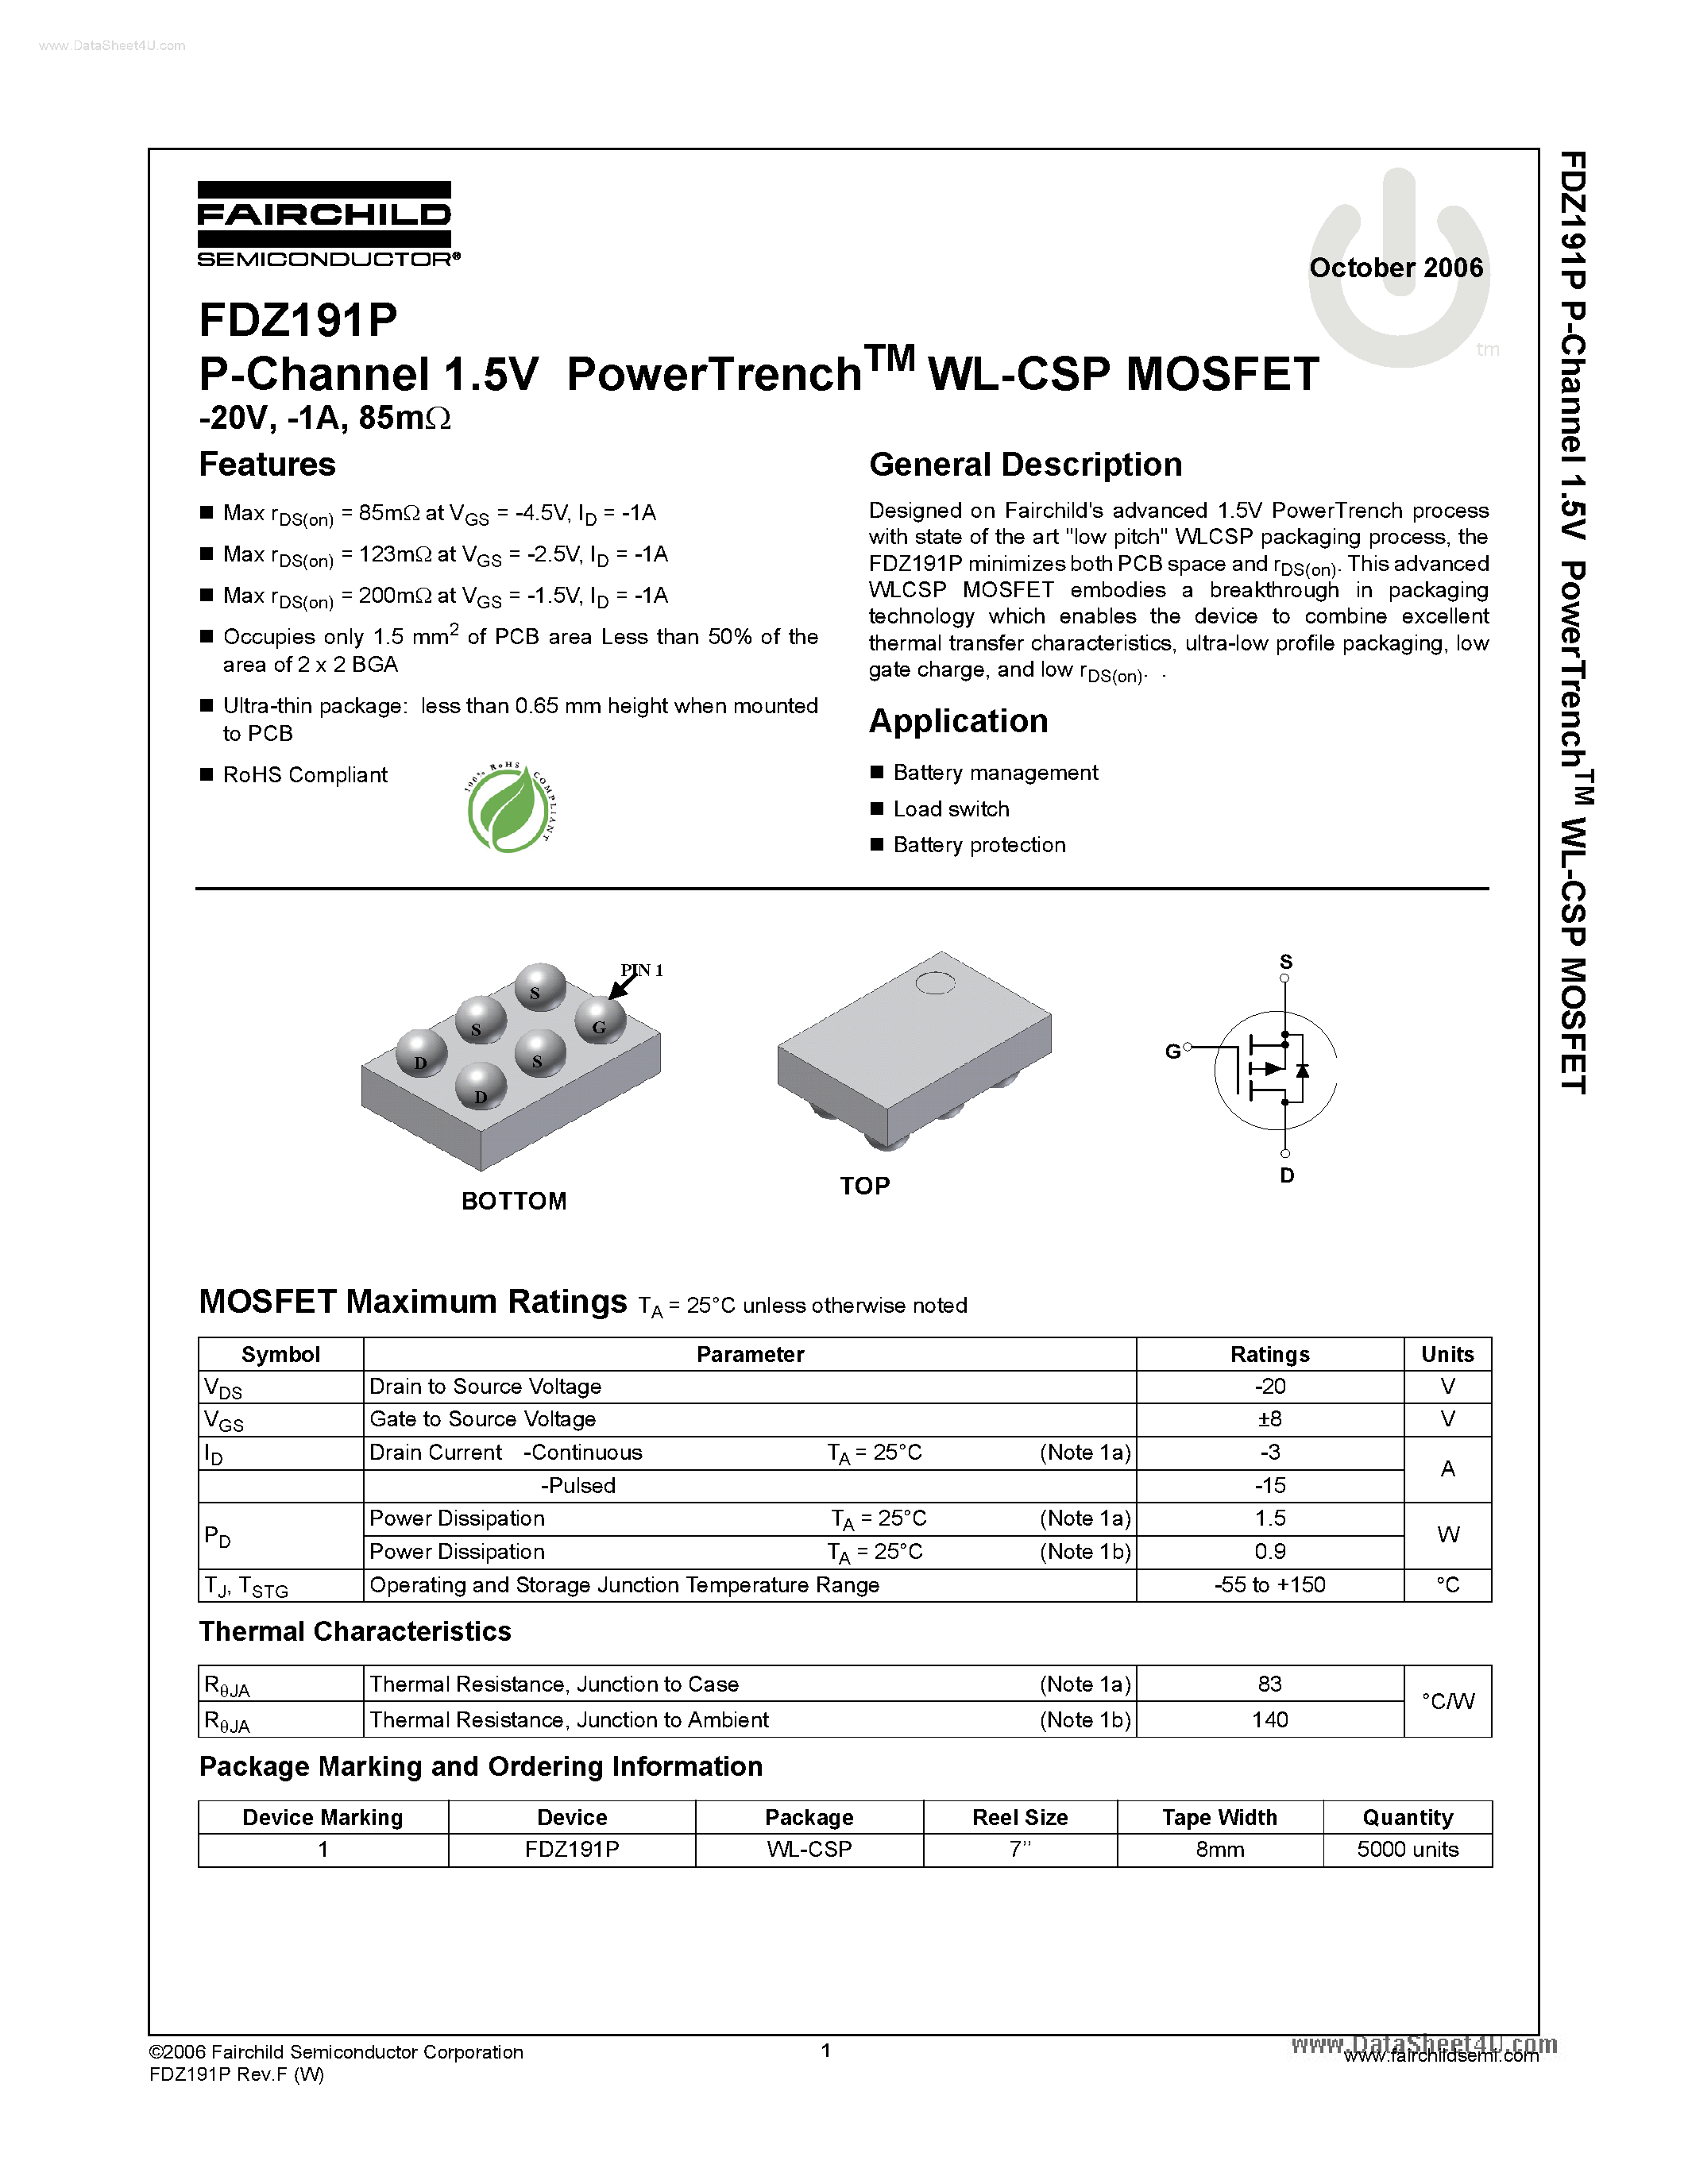 Даташит FDZ191P - P-Channel 1.5V PowerTrench WL-CSP MOSFET страница 1